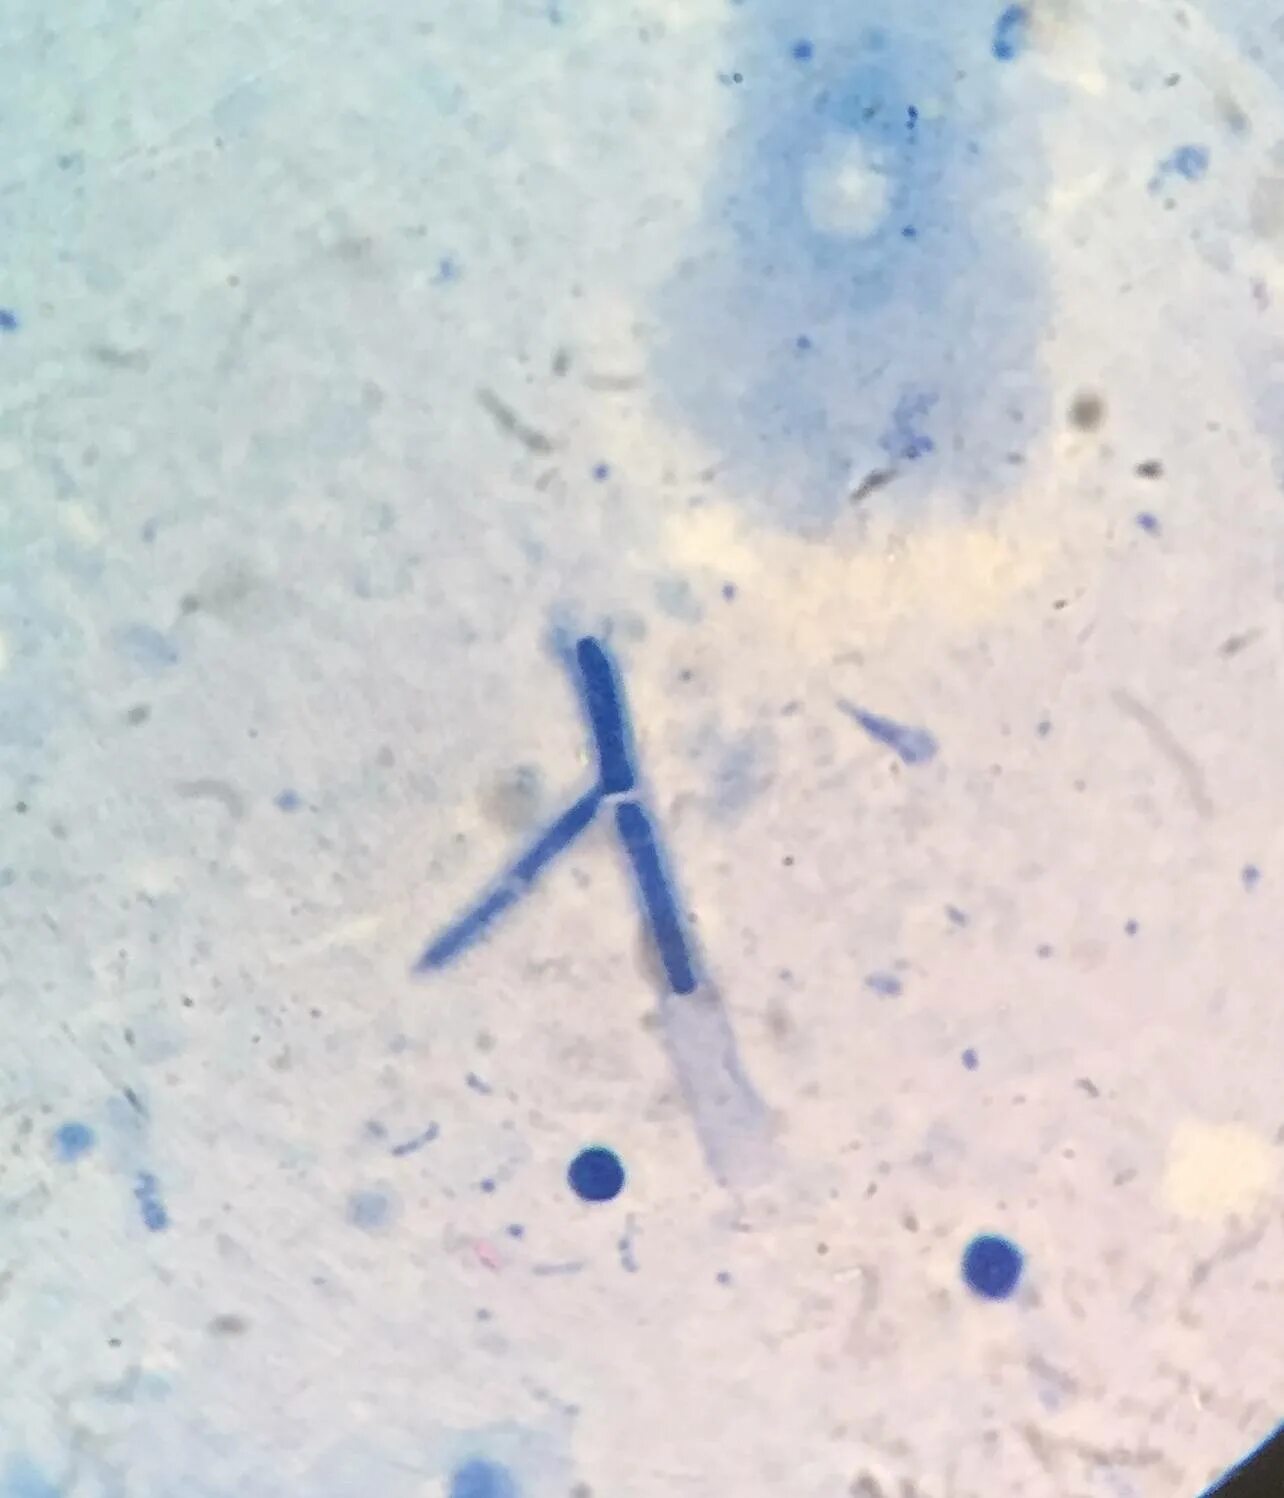 Грибы кандида микроскопия. Грибы Candida псевдомицелий. Микроскопия кандиды псевдомицелий. Кандида в мазке микроскопия. Мицелий грибов у женщин